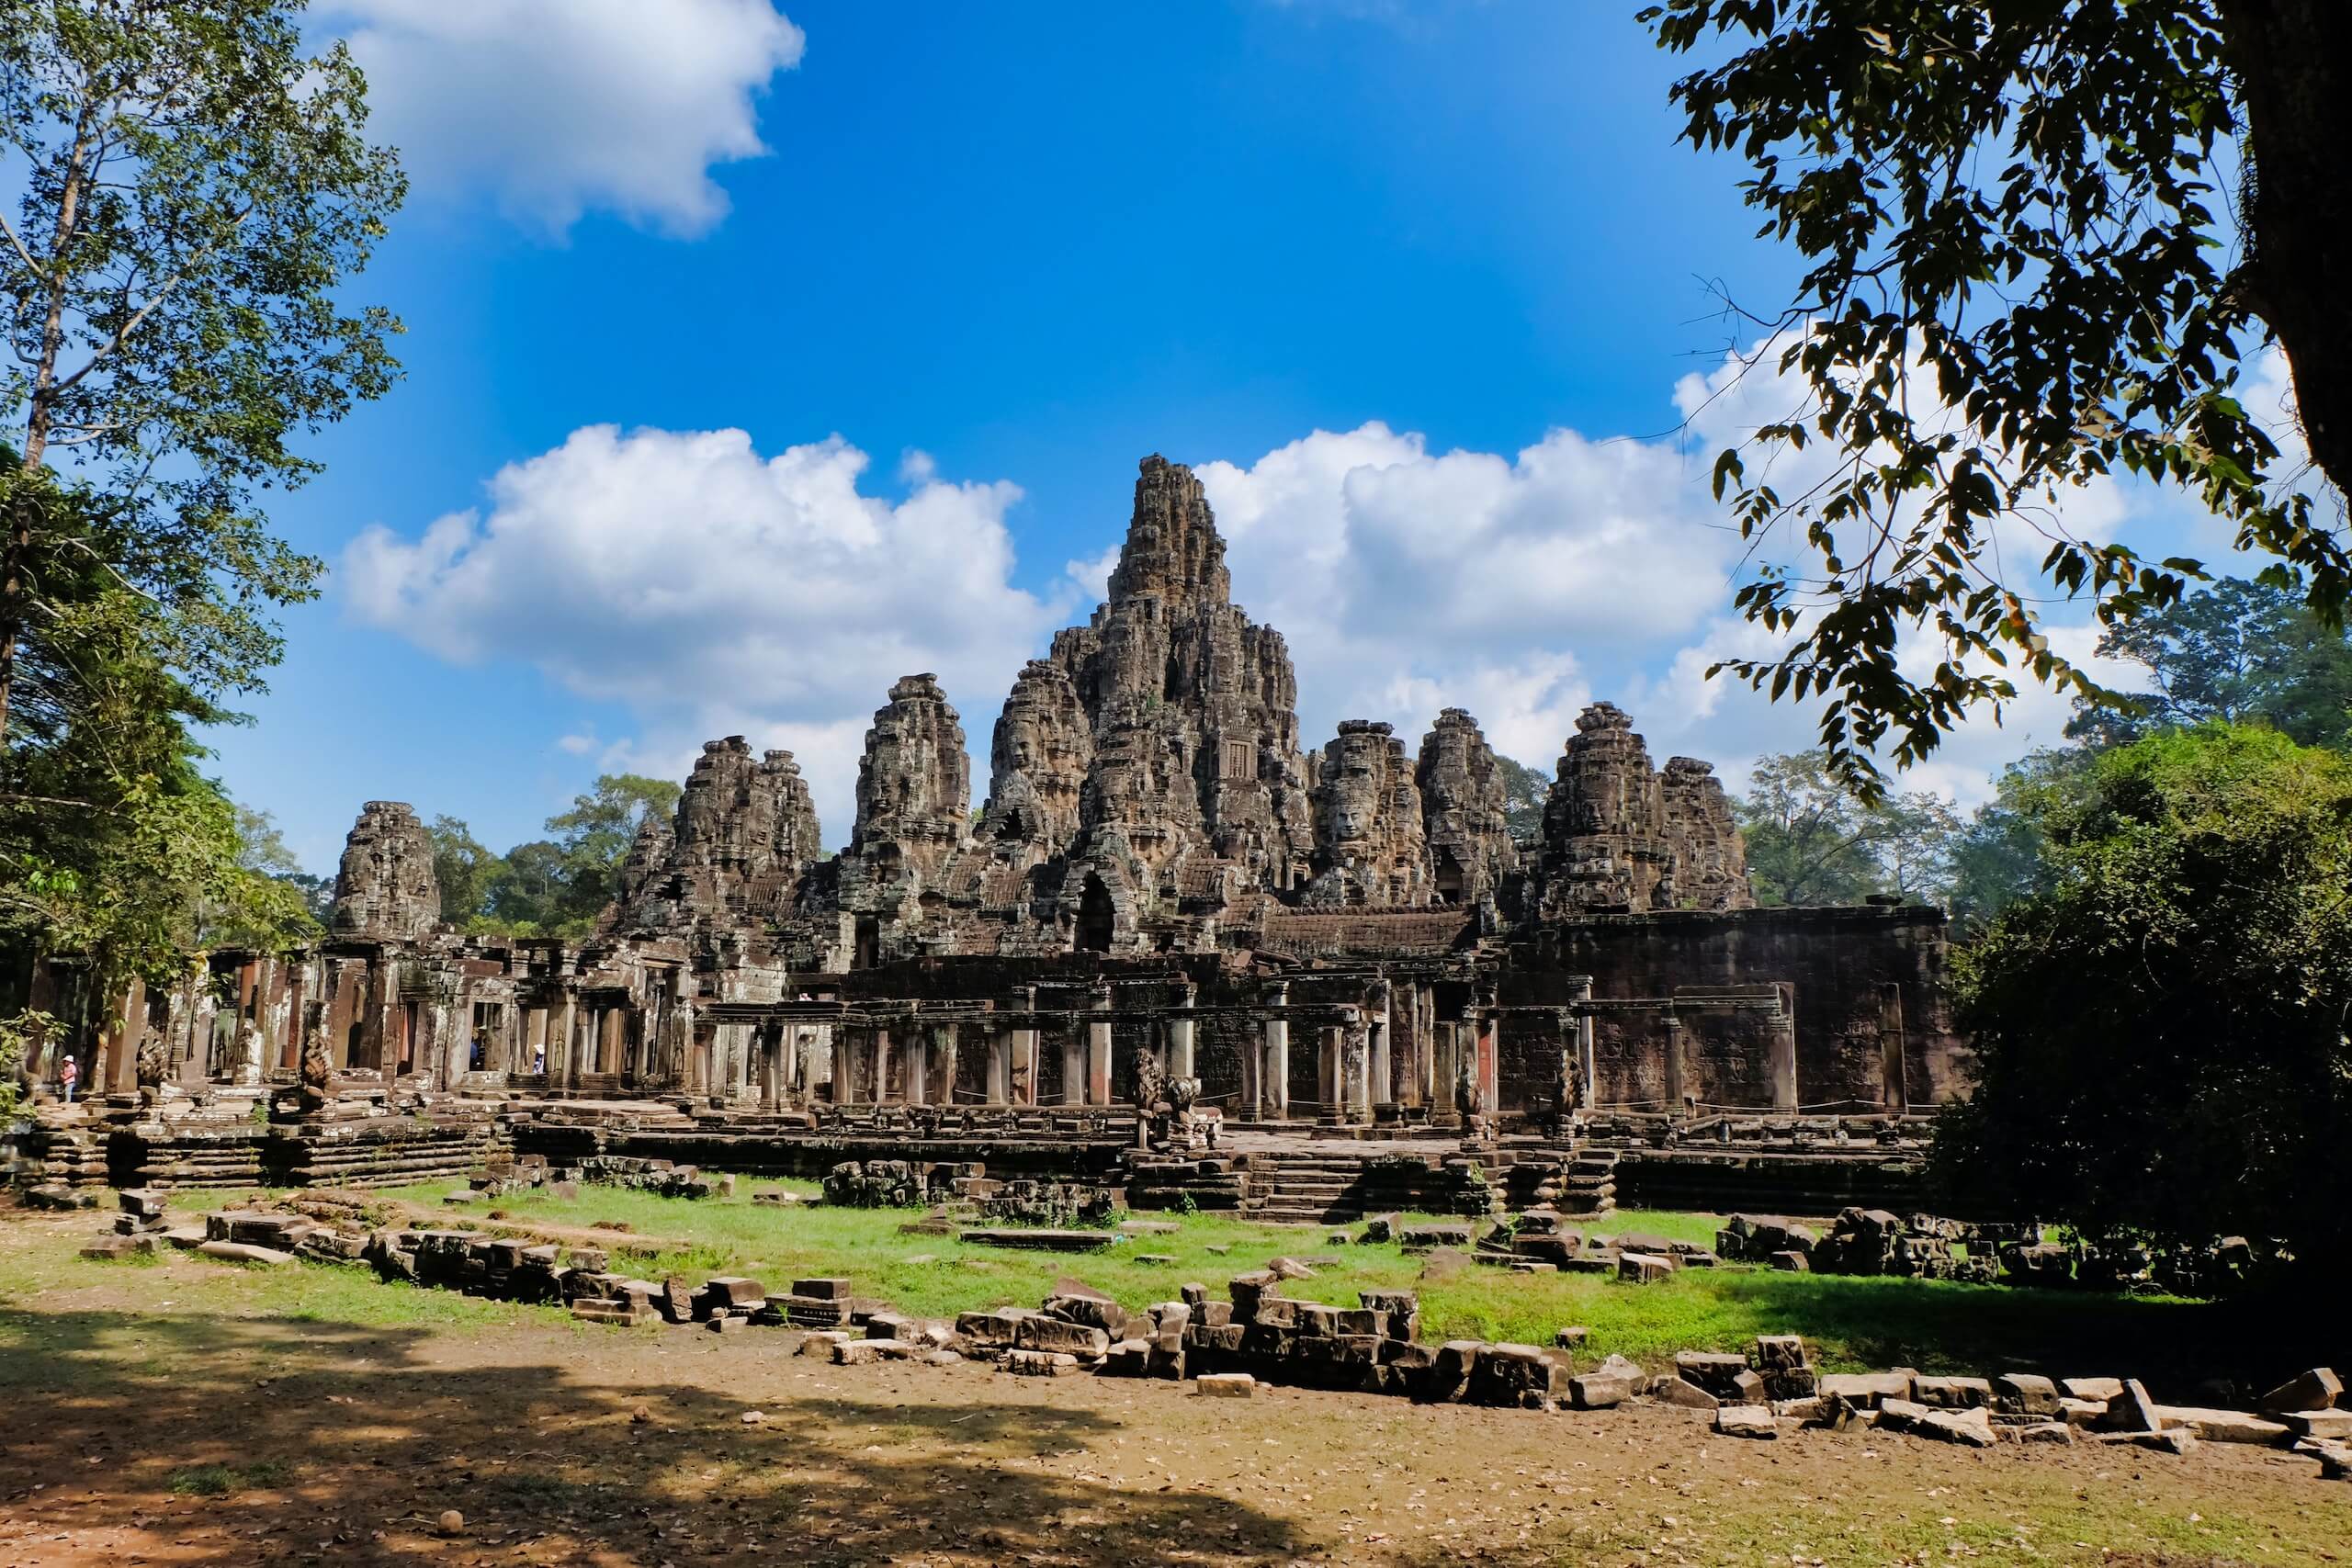   Indochina & Angkor Wat